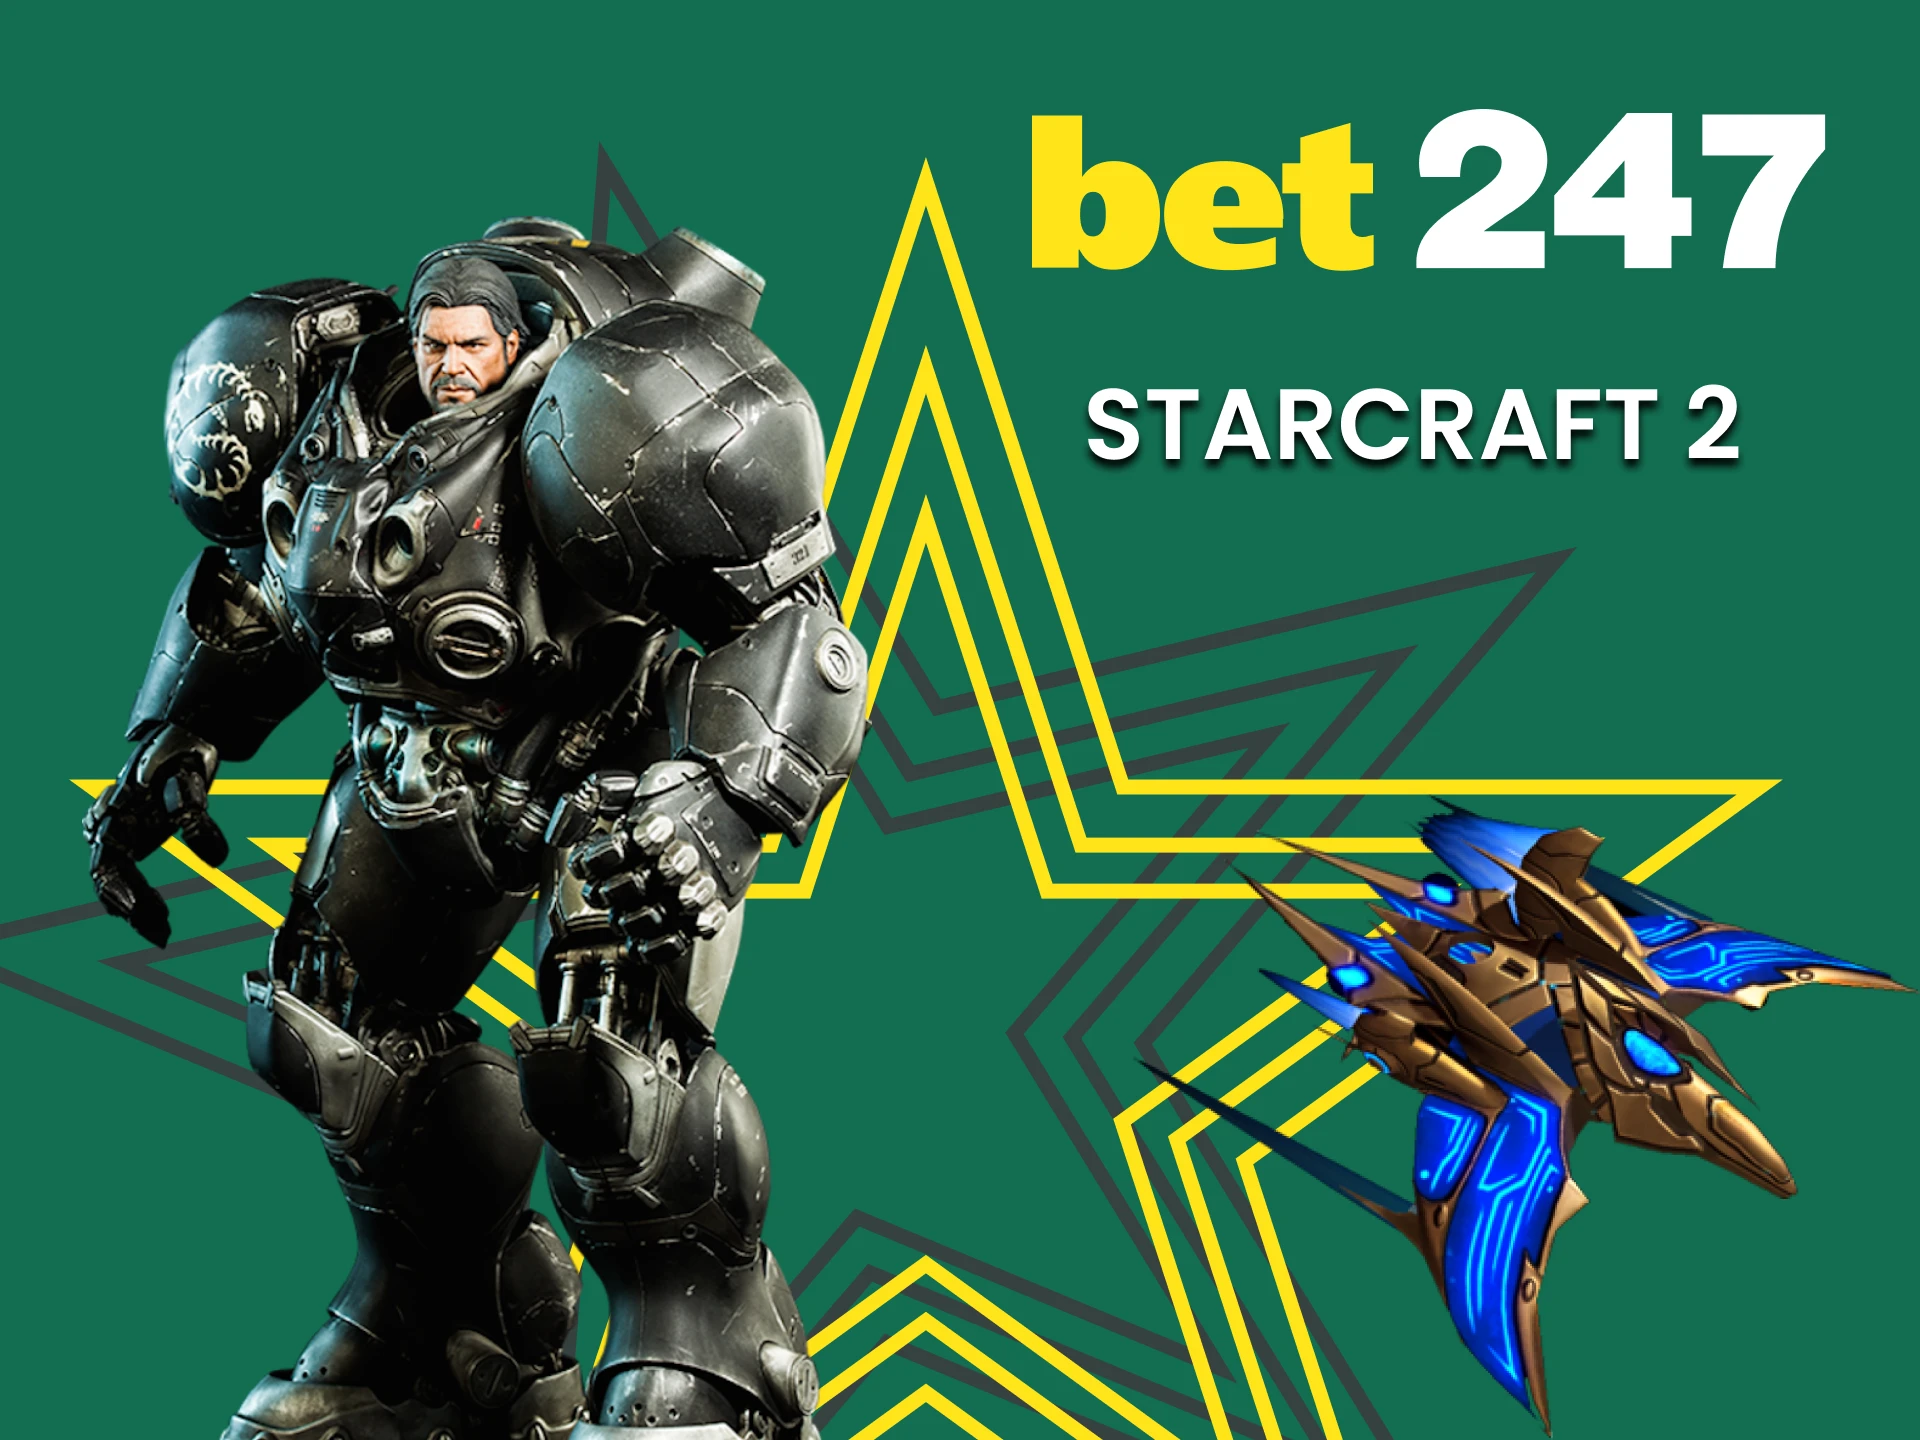 Bet on Starcraft 2 at Bet247.